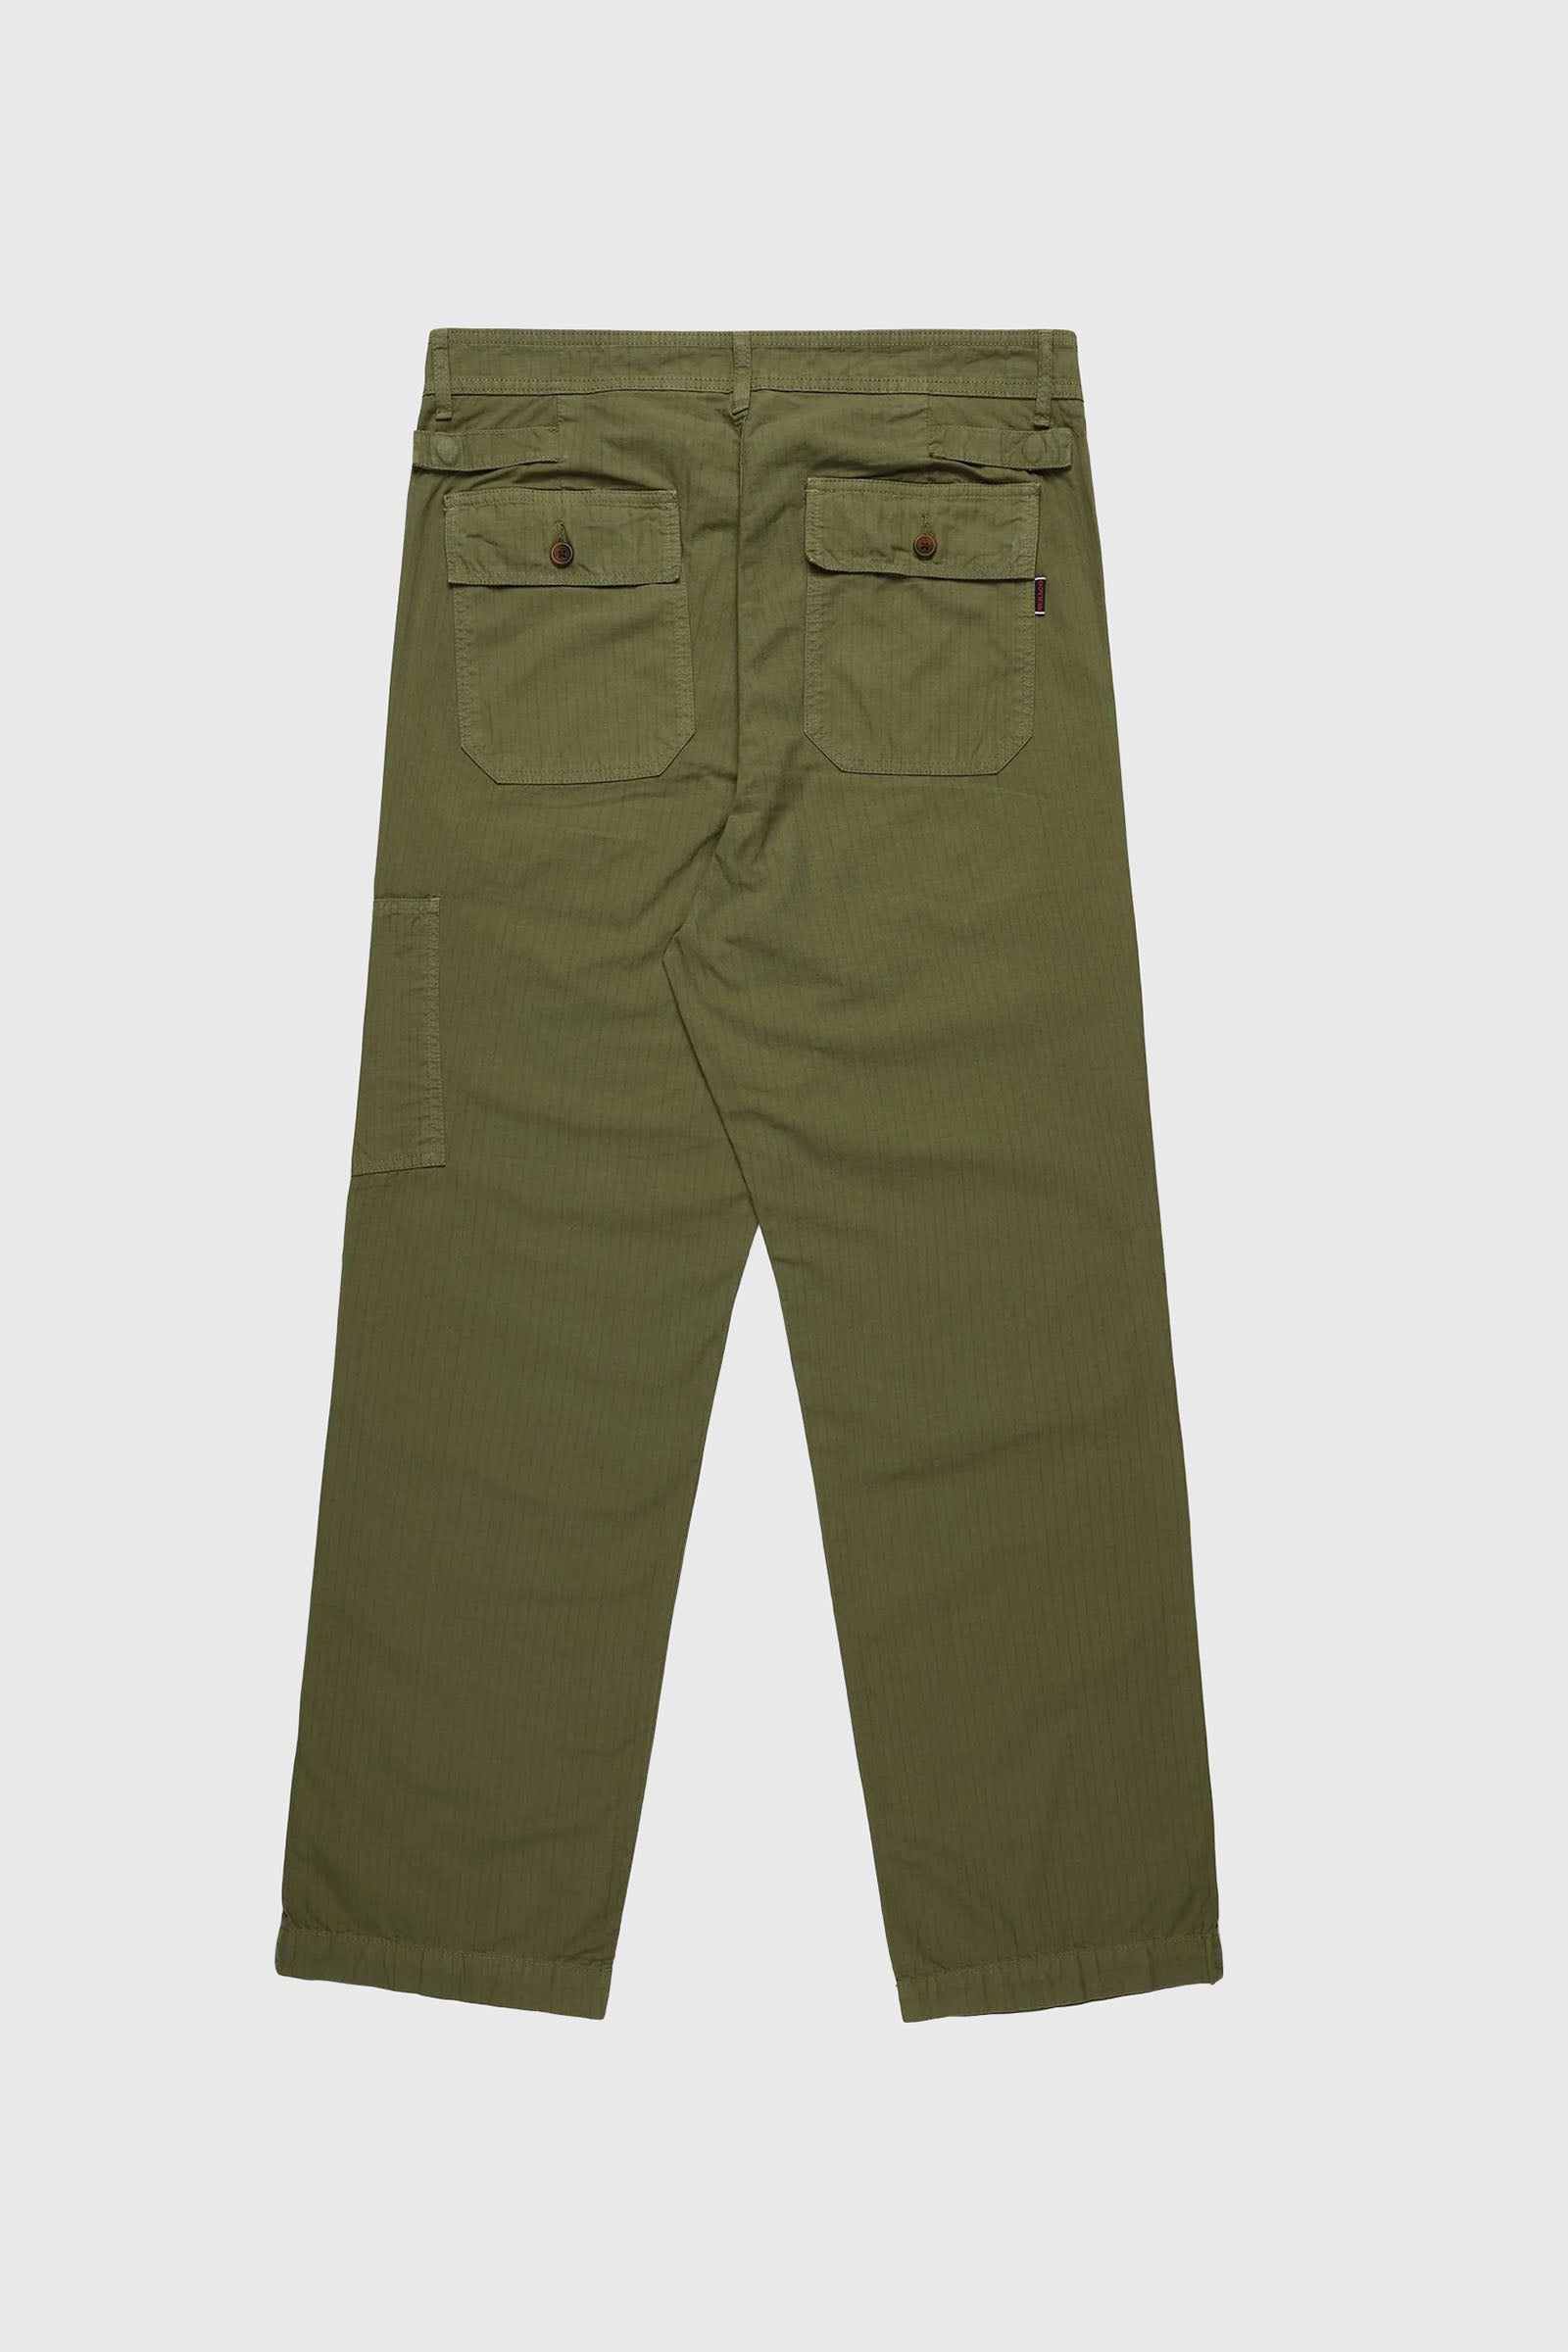 Sebago Pantalone Milton Verde Militare Uomo - 2